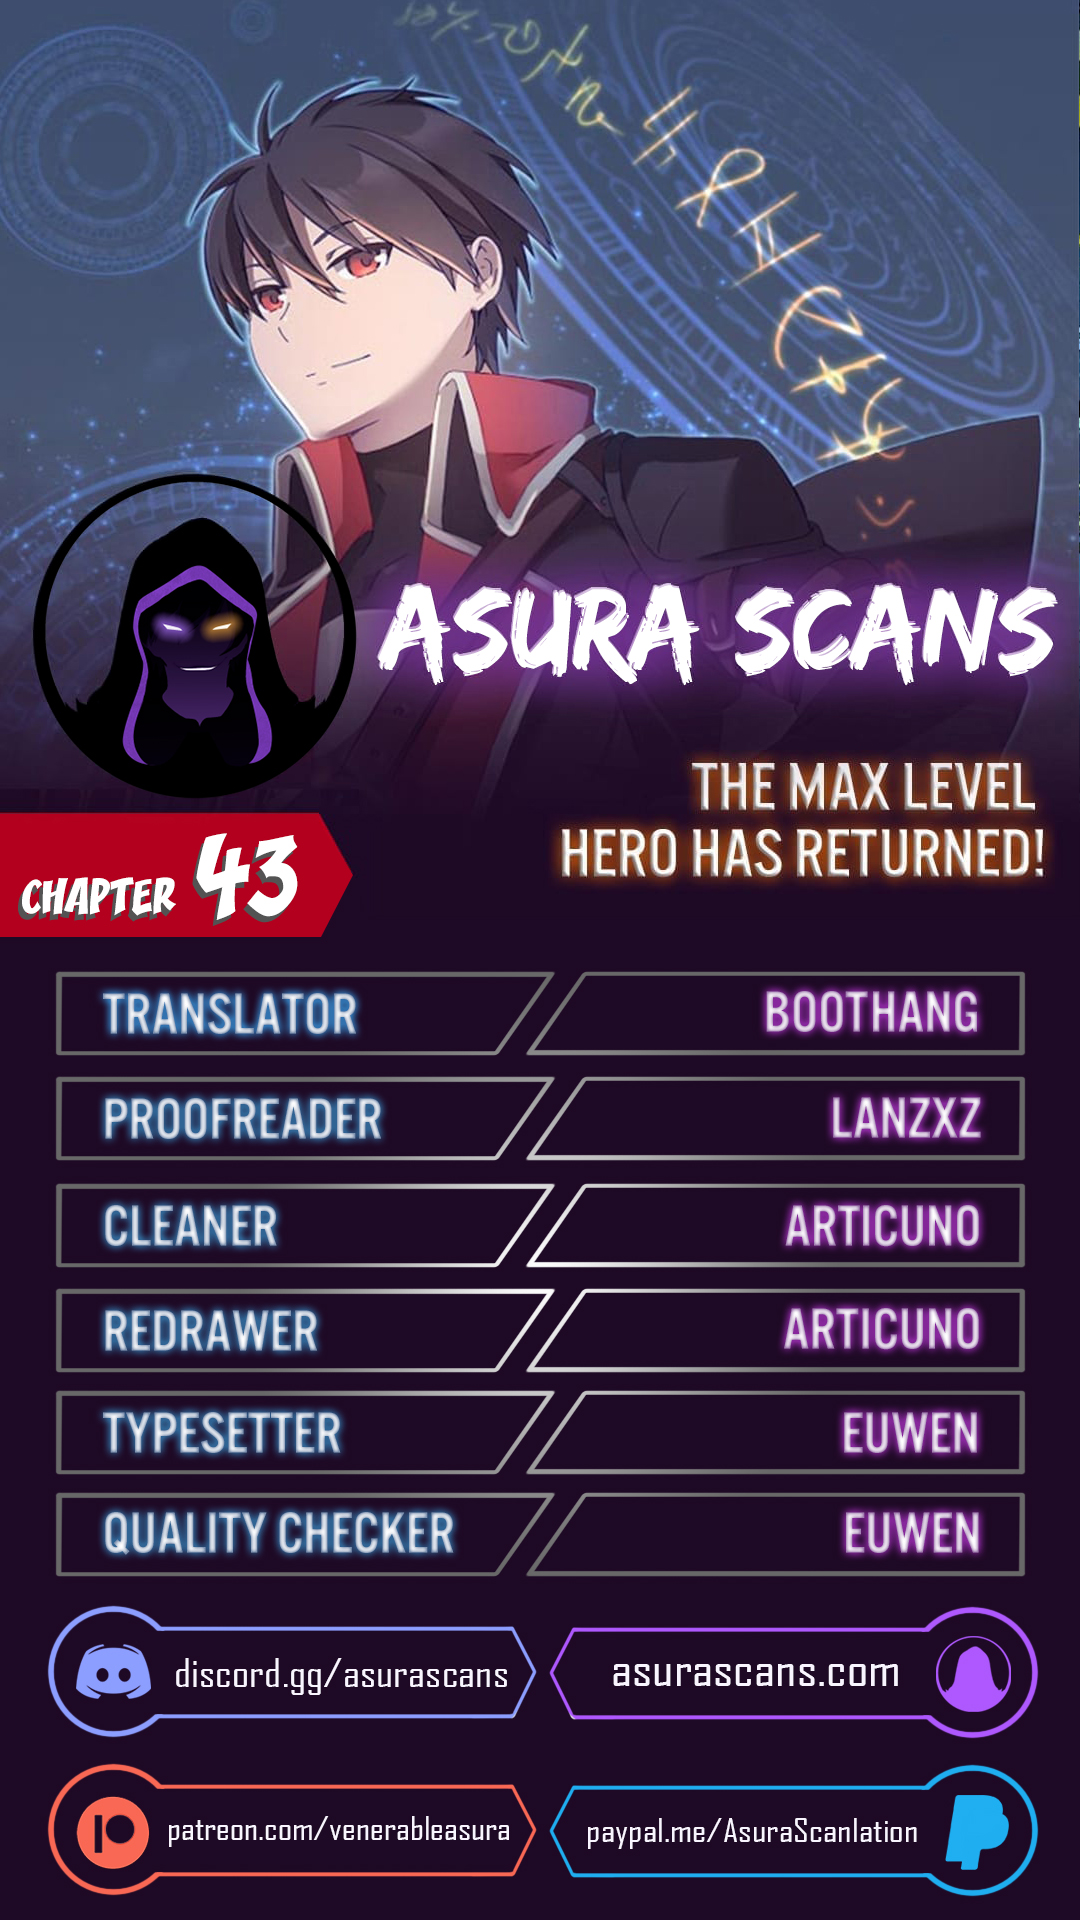 The Max Level Hero has Returned! image